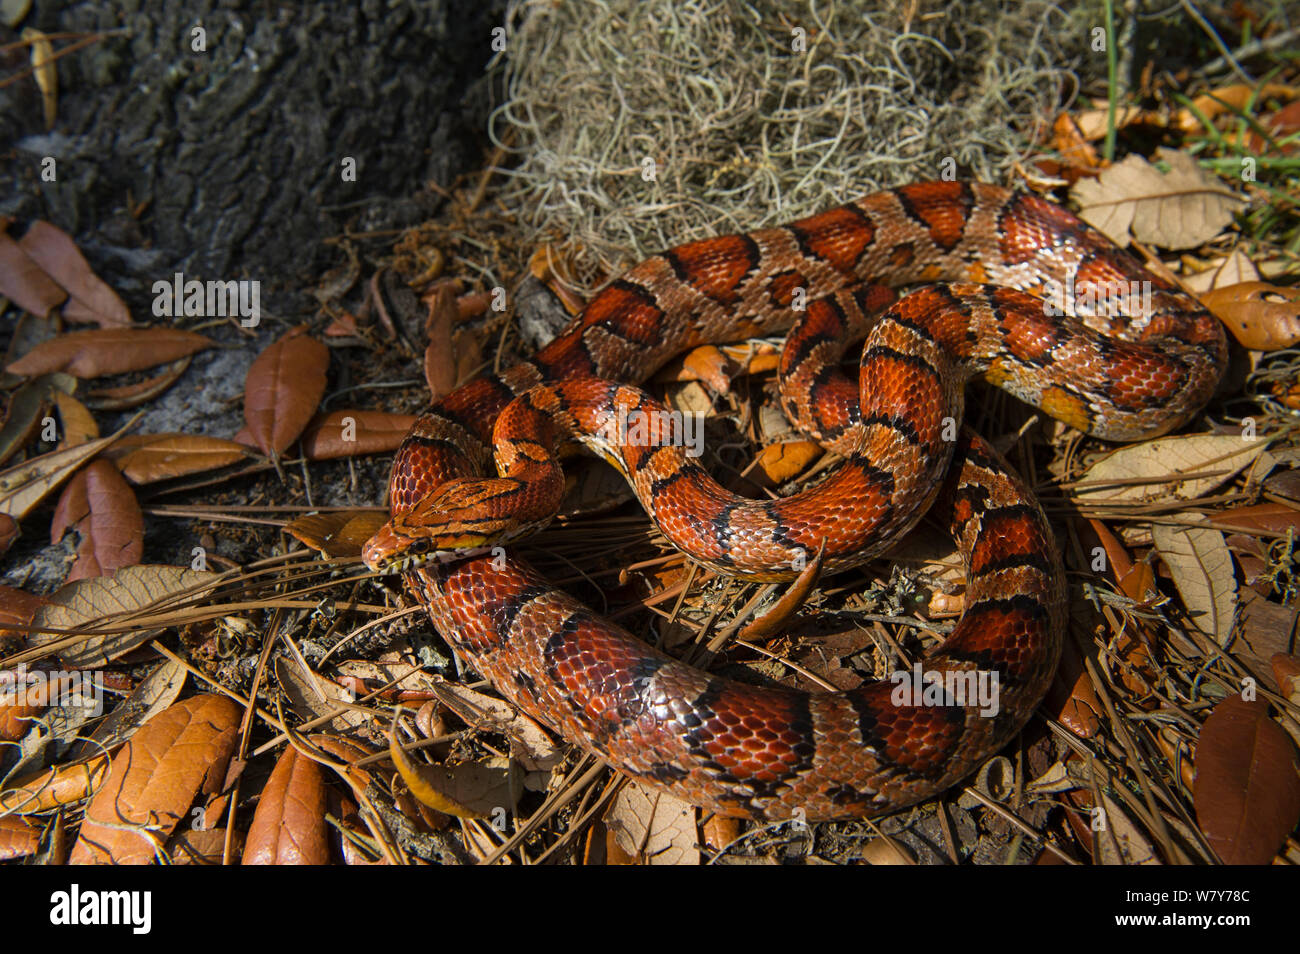 Corn snake / Red rat snake (Elaphe guttata) Little St Simon&#39;s Island, Barrier Islands, Georgia, USA, April. Captive, occurs in North America. Stock Photo